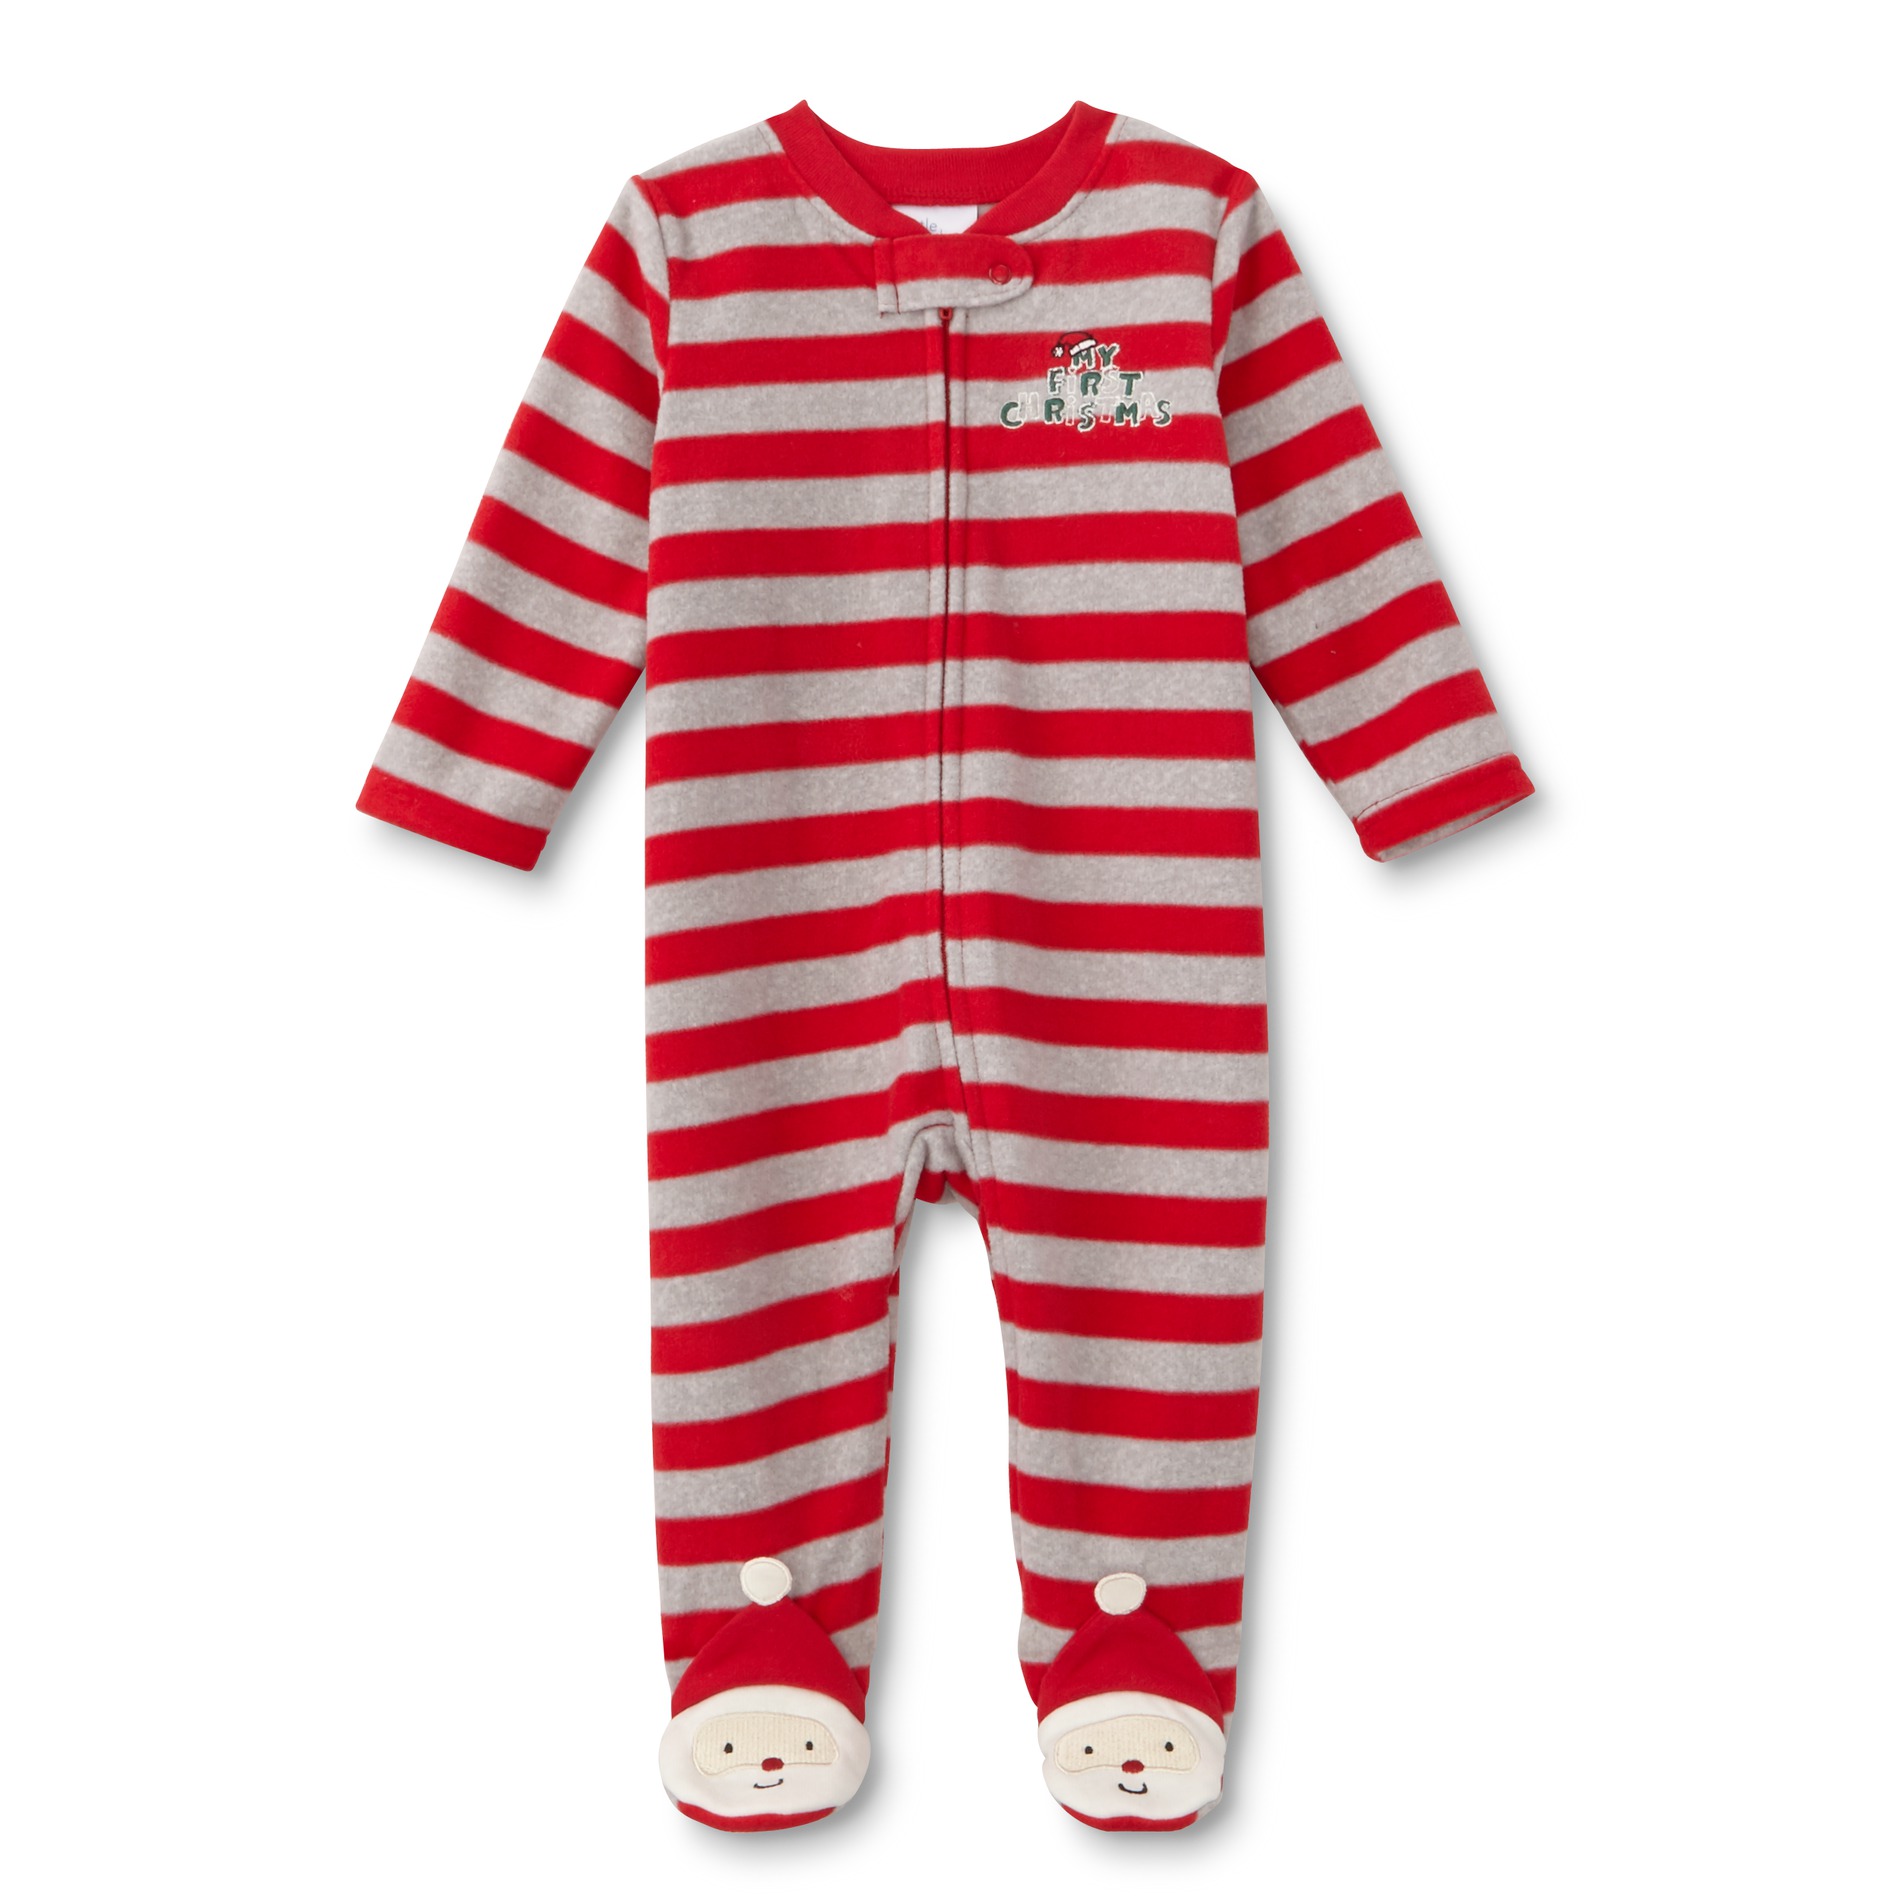 Little Wonders Newborn Boys' Christmas Sleeper Pajamas - Santa